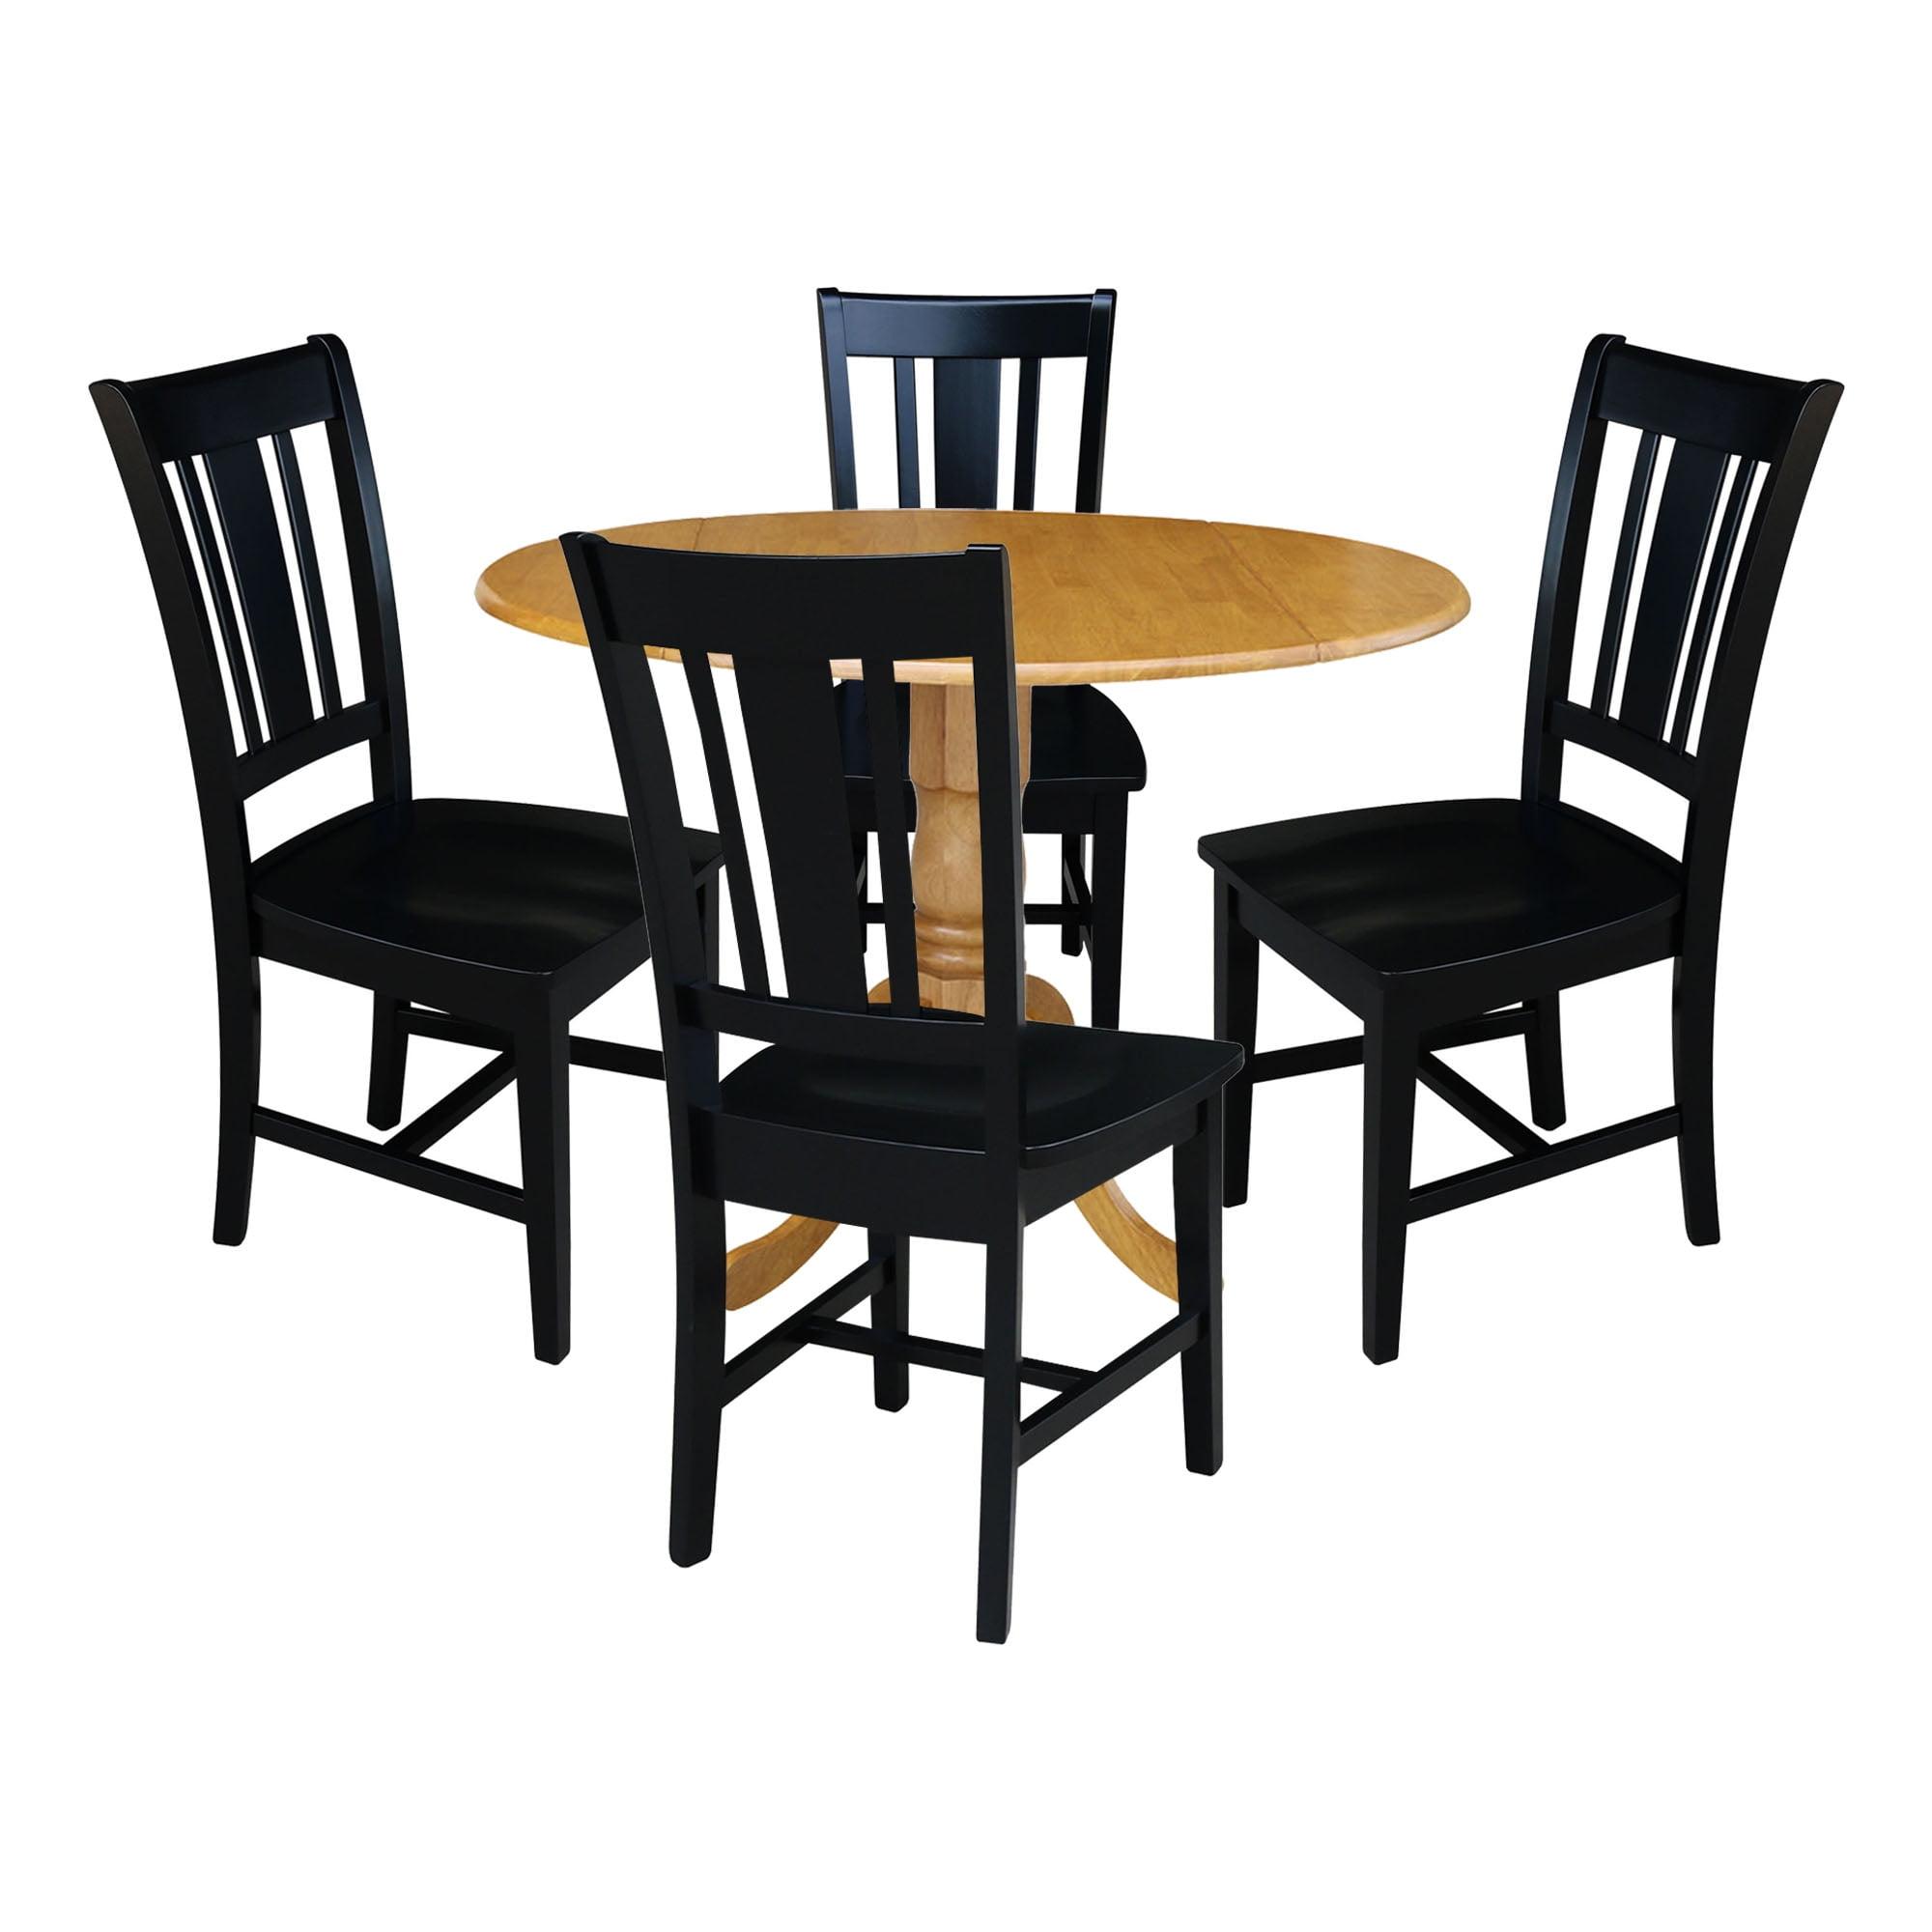 Versatile Dual Drop Leaf Dining Set with Splat Back Chairs in Oak/Black